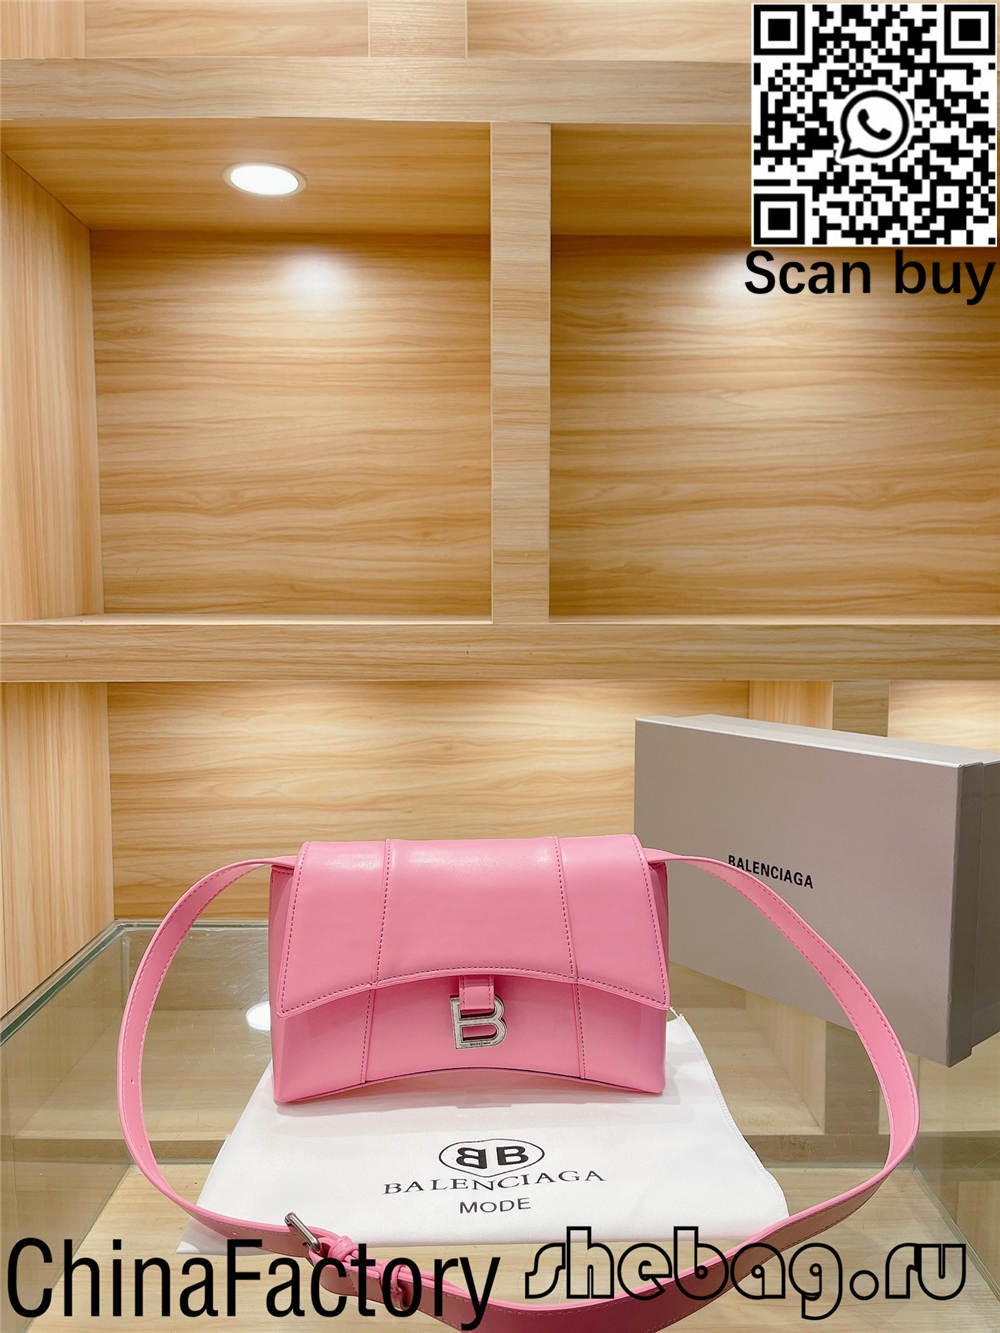 How to buy cheap replica balenciaga bags from Hongkong? (2022 updated)-Best Quality Fake Louis Vuitton Bag Online Store, Replica designer bag ru